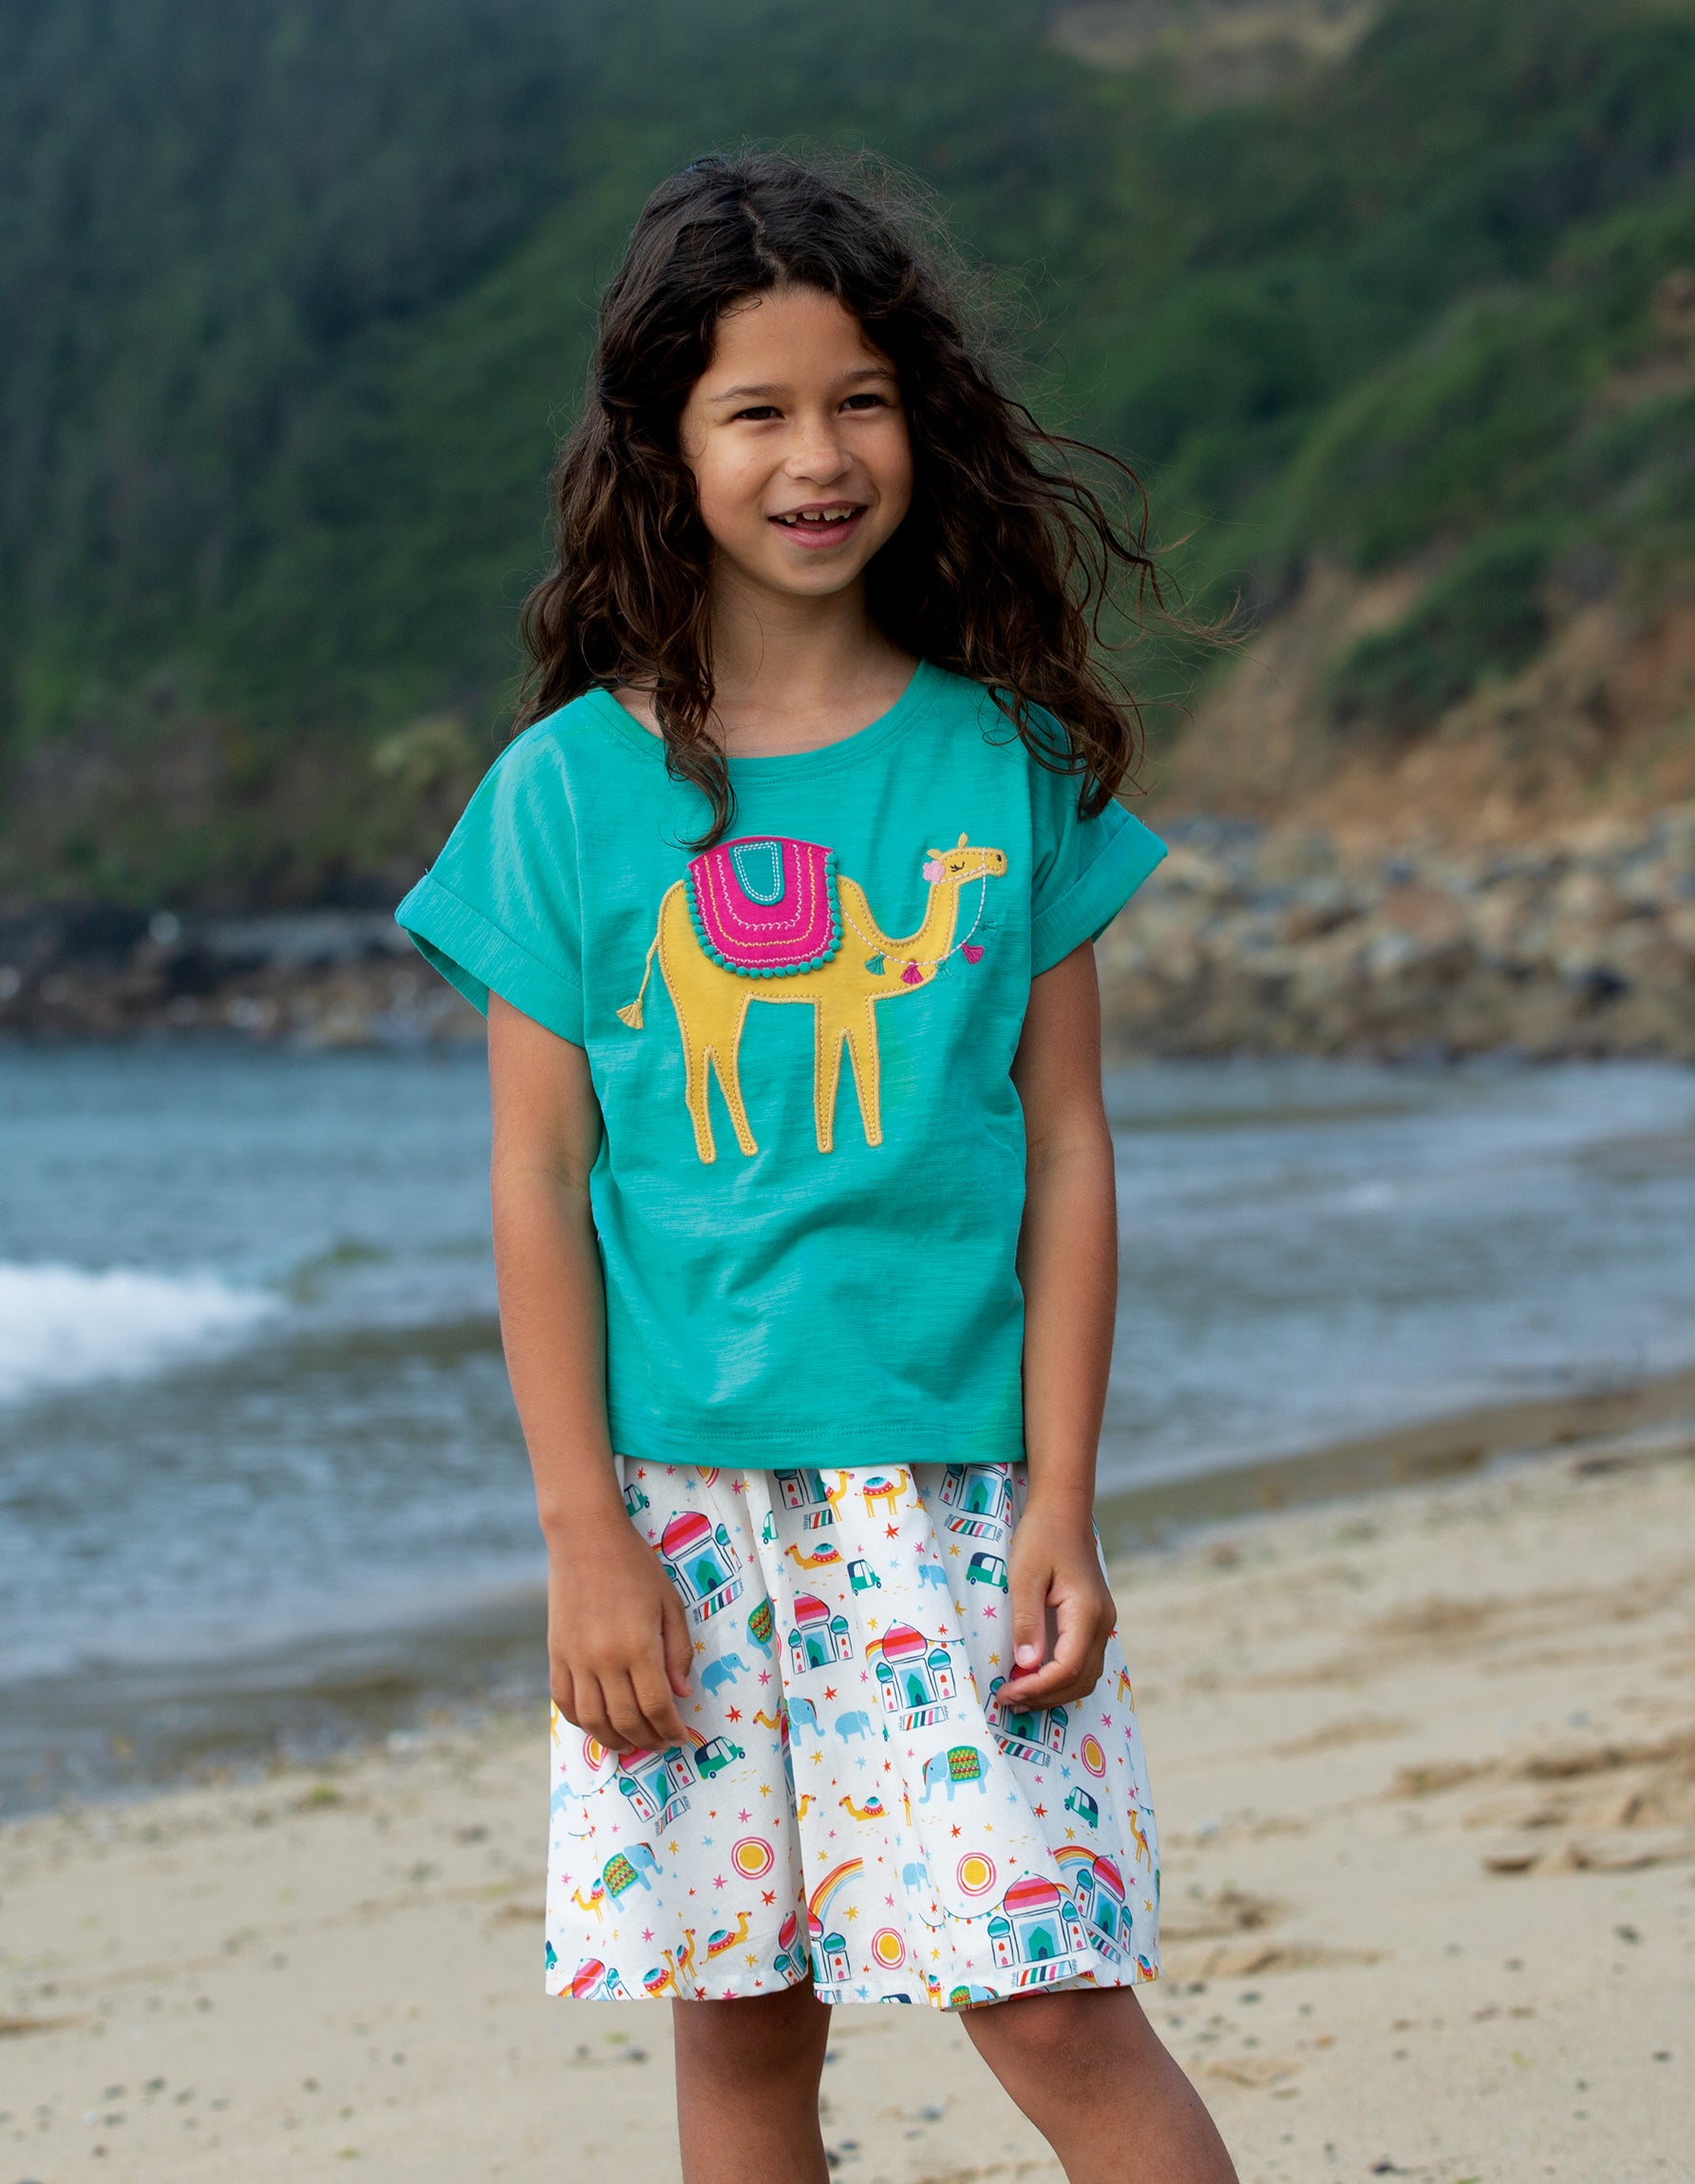 Frugi Sophia Slub T-shirt Short Sleeve - Pacific Aqua/ Camel